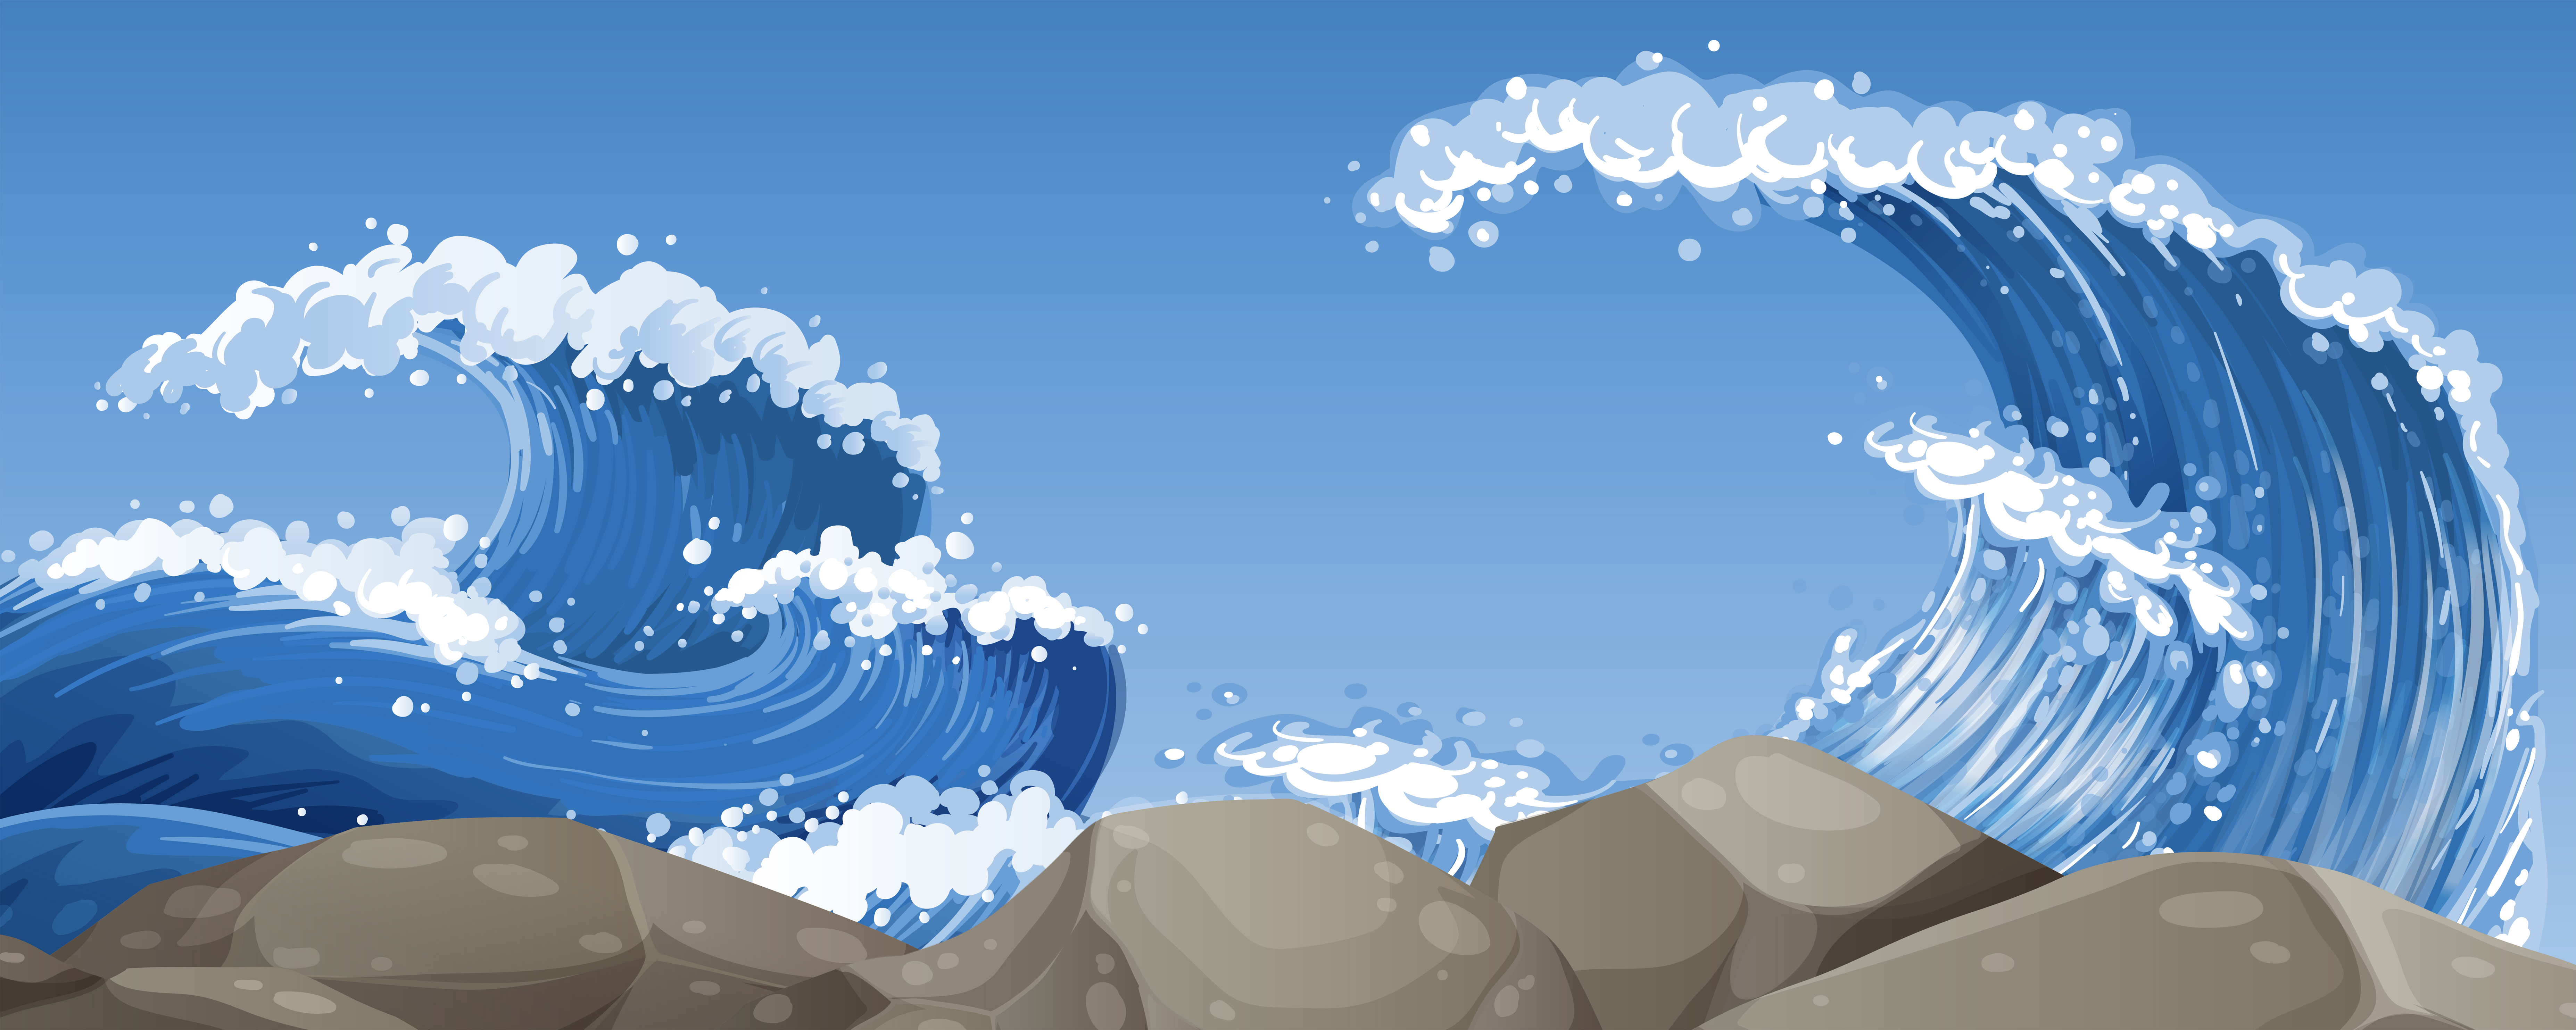 Big waves over the rocks - Download Free Vectors, Clipart ...